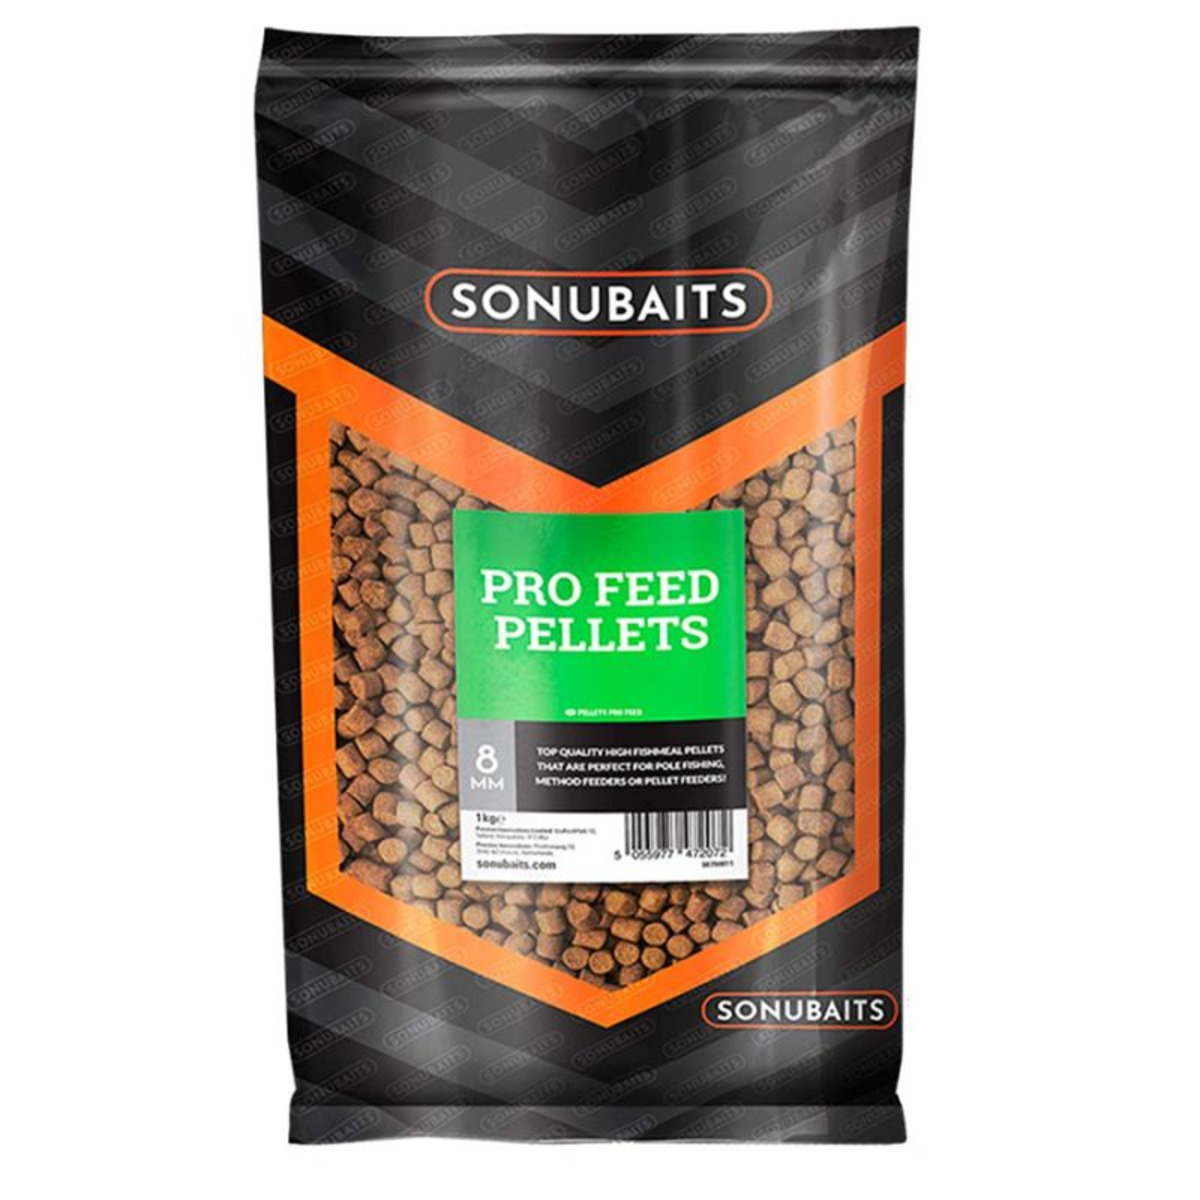 Sonubaits Pro Feed Pellets - 8 mm - 1 kg